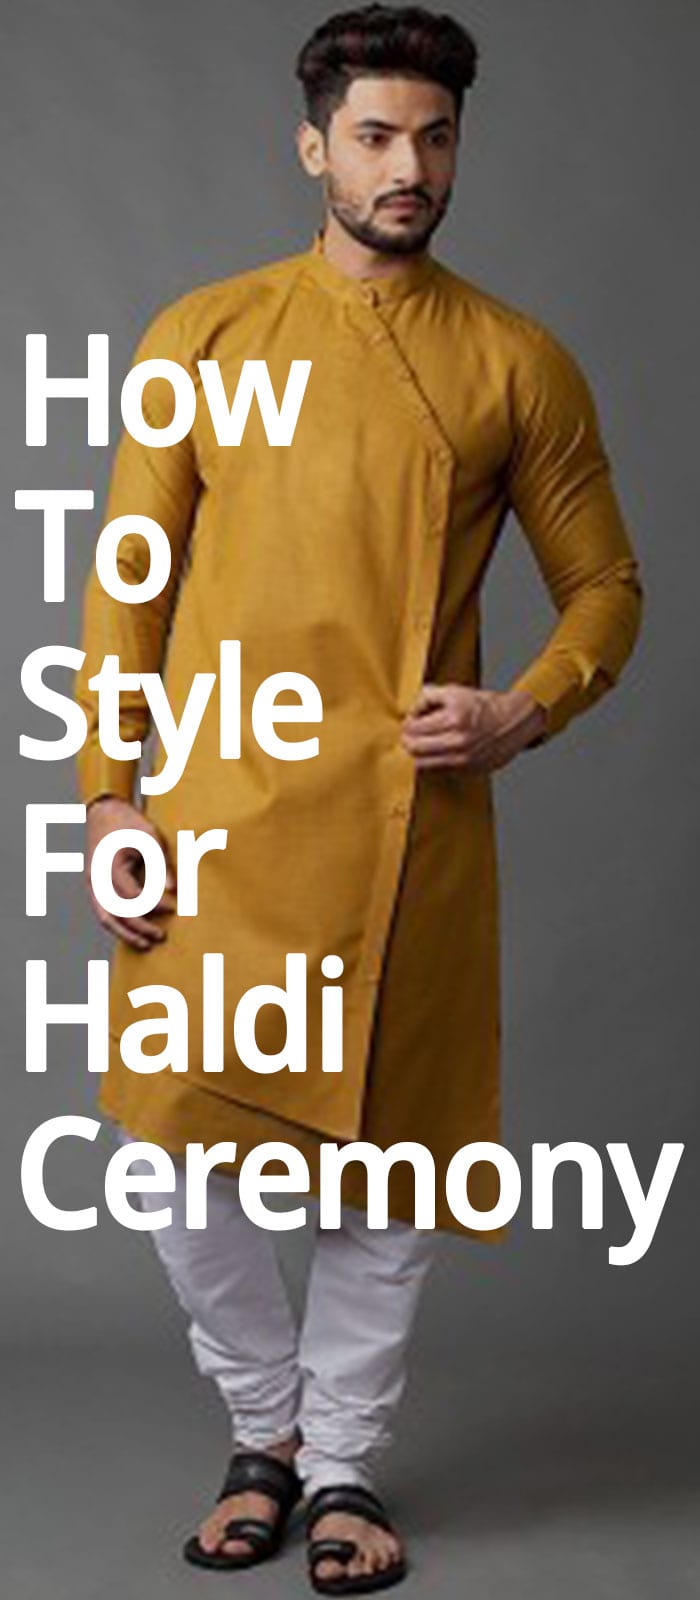 How To Style For Haldi Ceremony